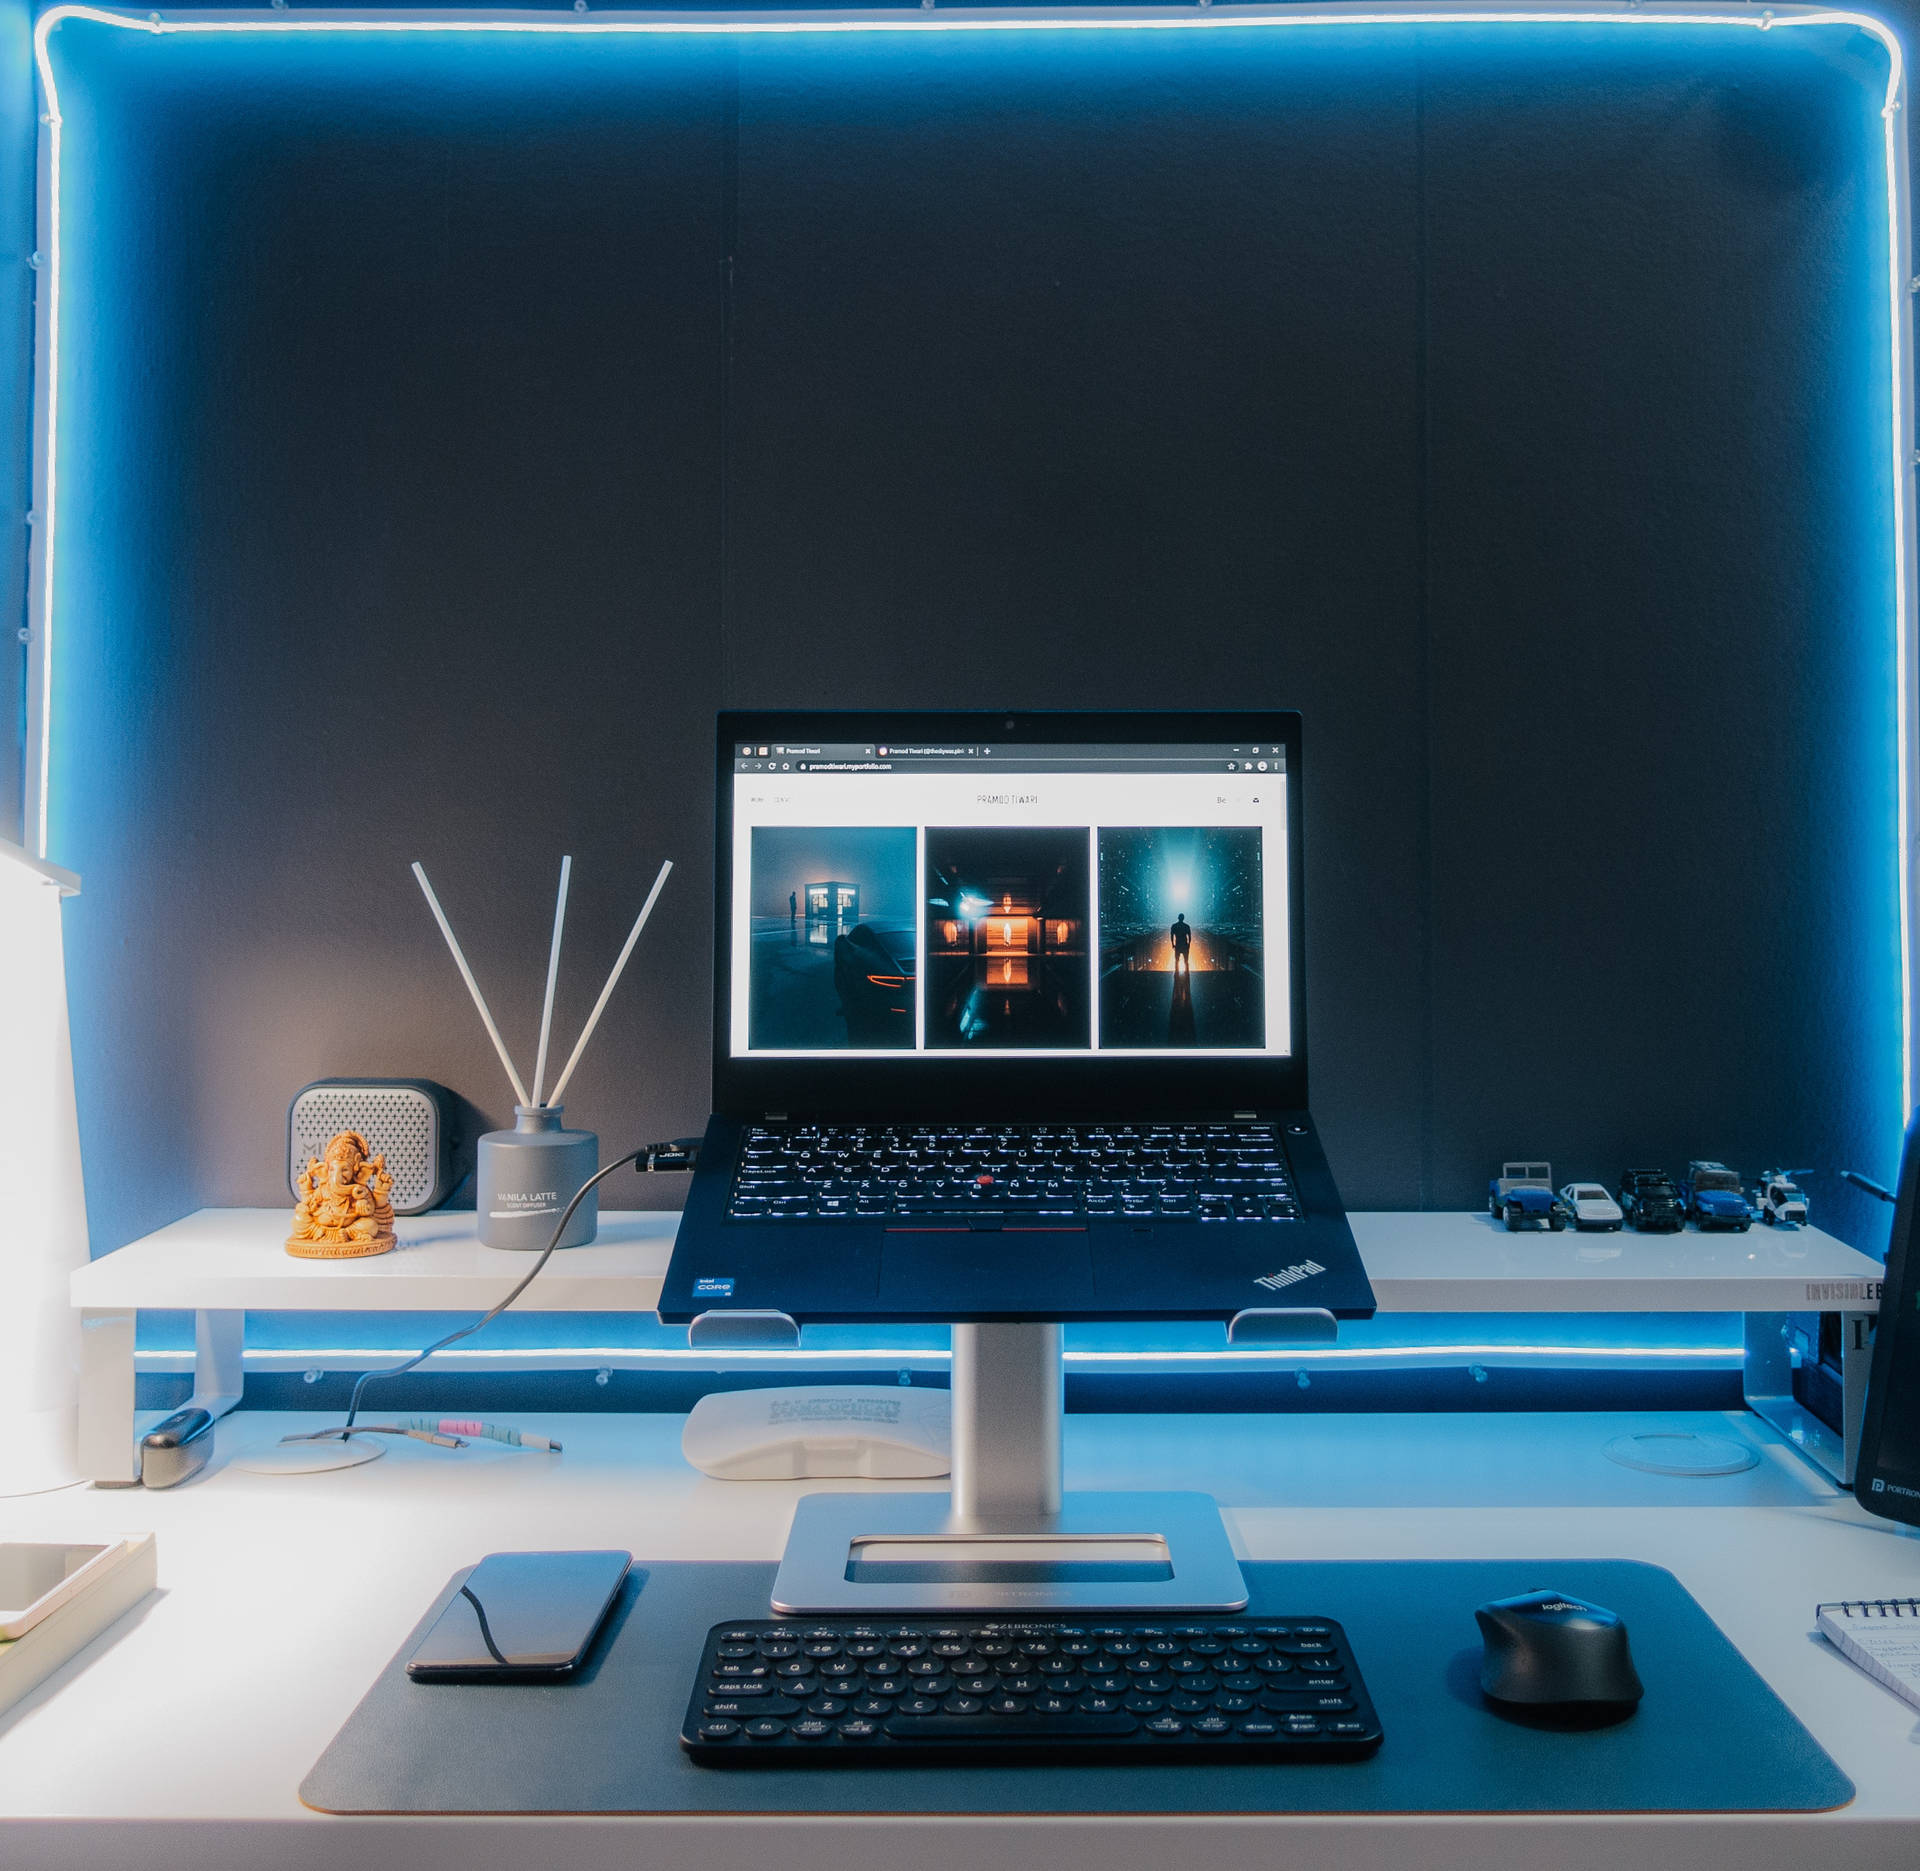 Aesthetic Tumblr Laptop Blue Light Background